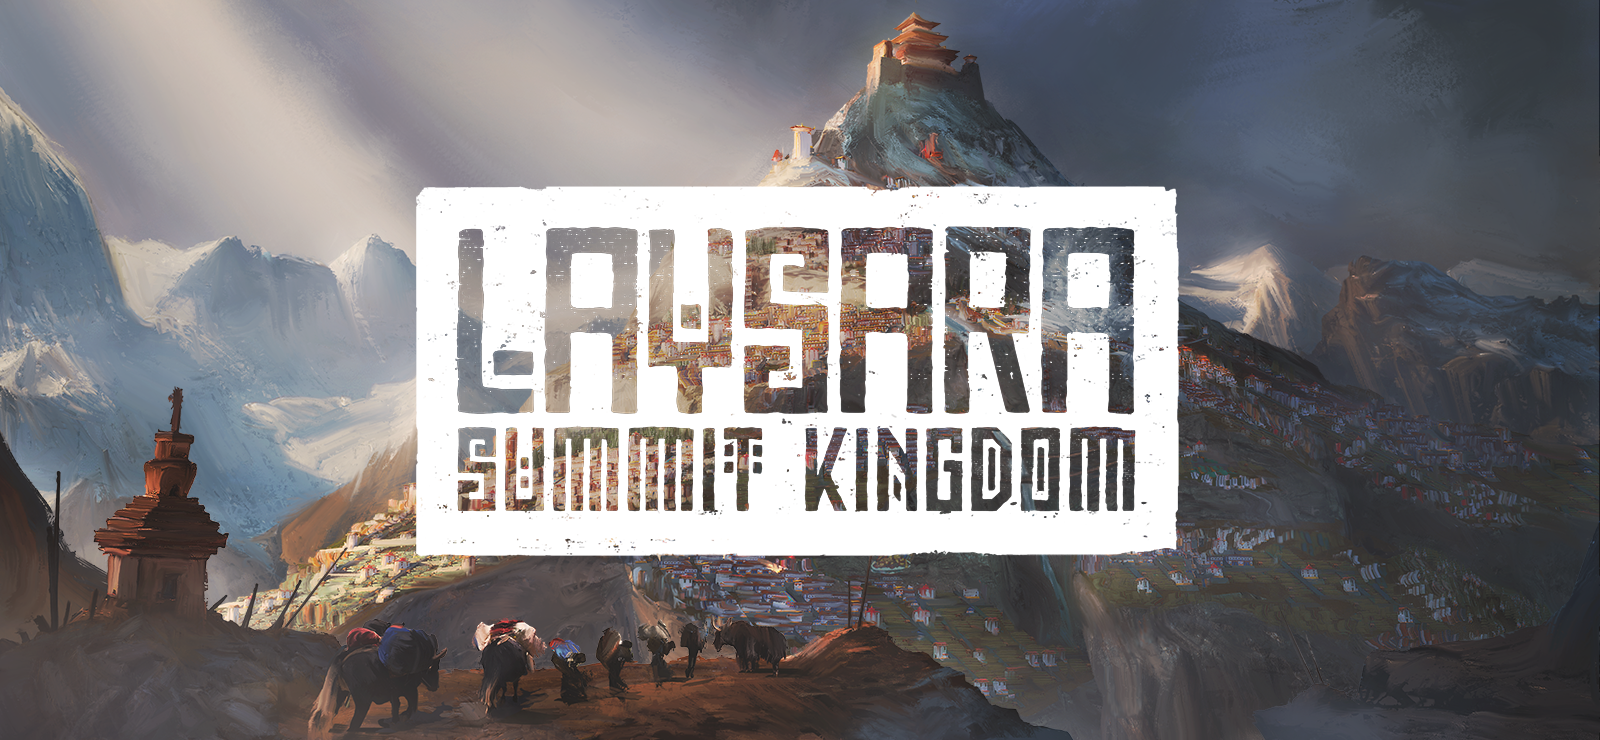 Laysara: Summit Kingdom Demo on GOG.com